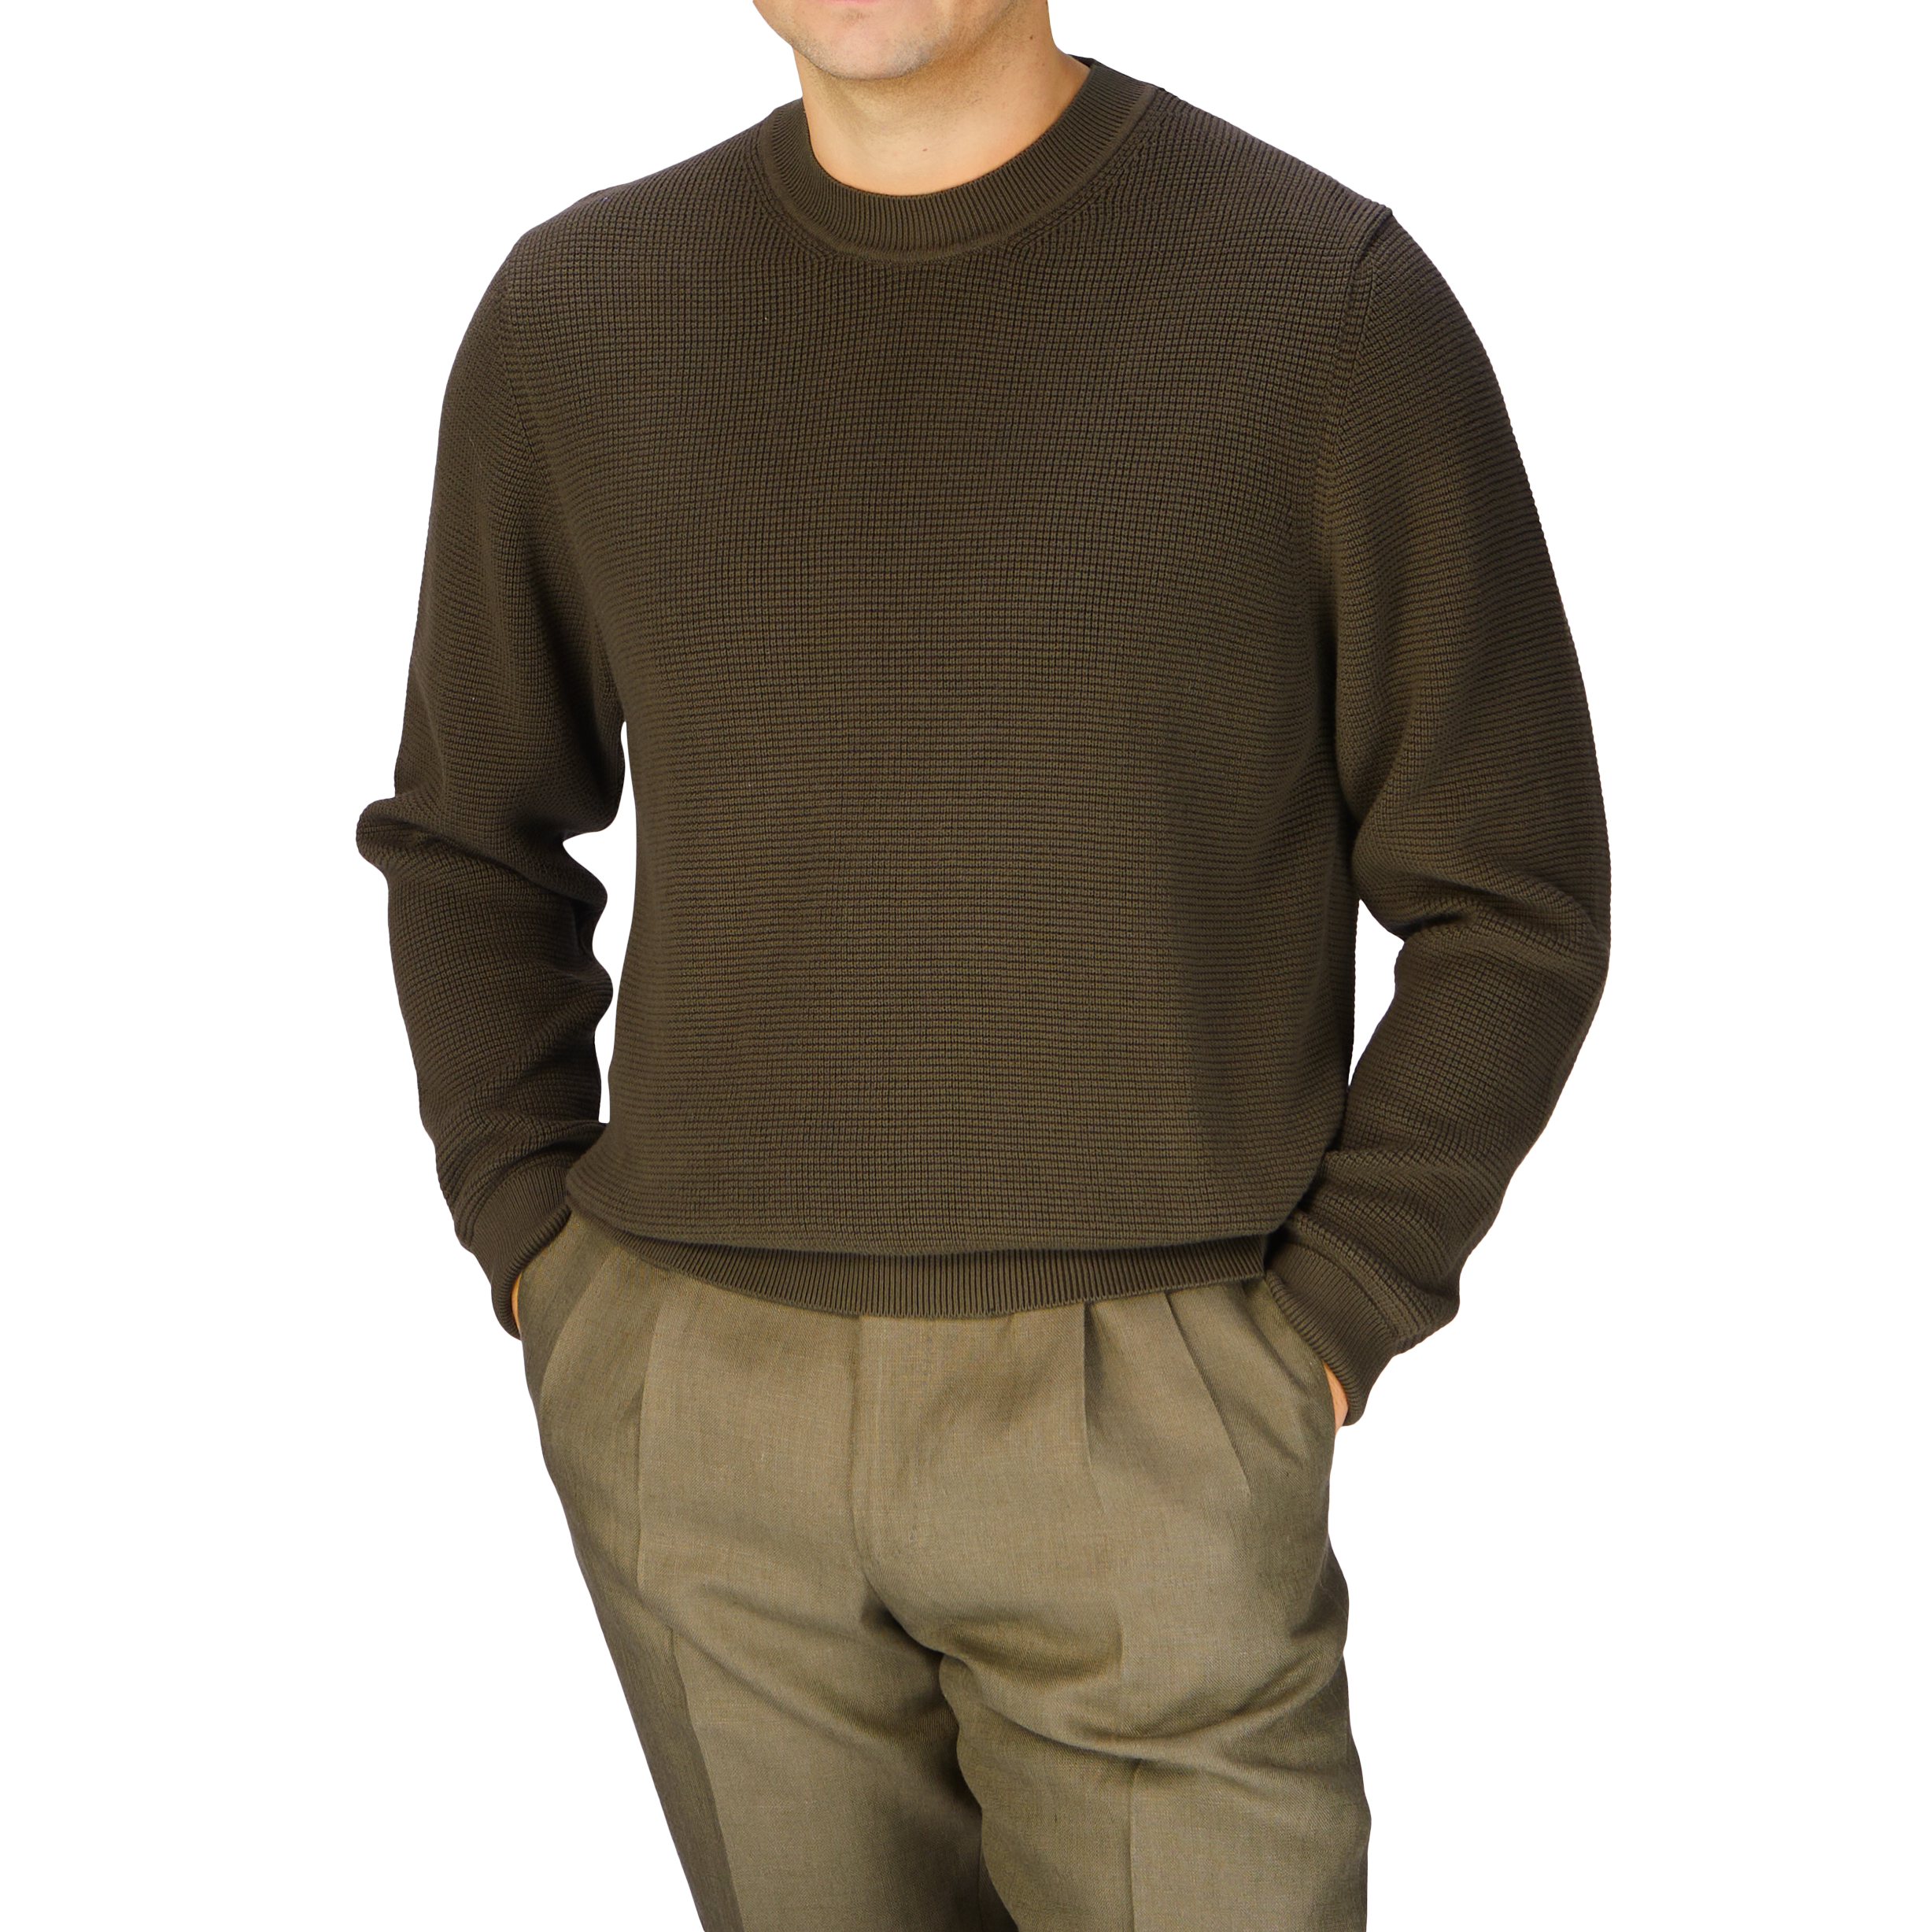 A man wearing a Khaki Green Cotton Waffle Stitch Crew Neck sweater and pants by Sunspel.